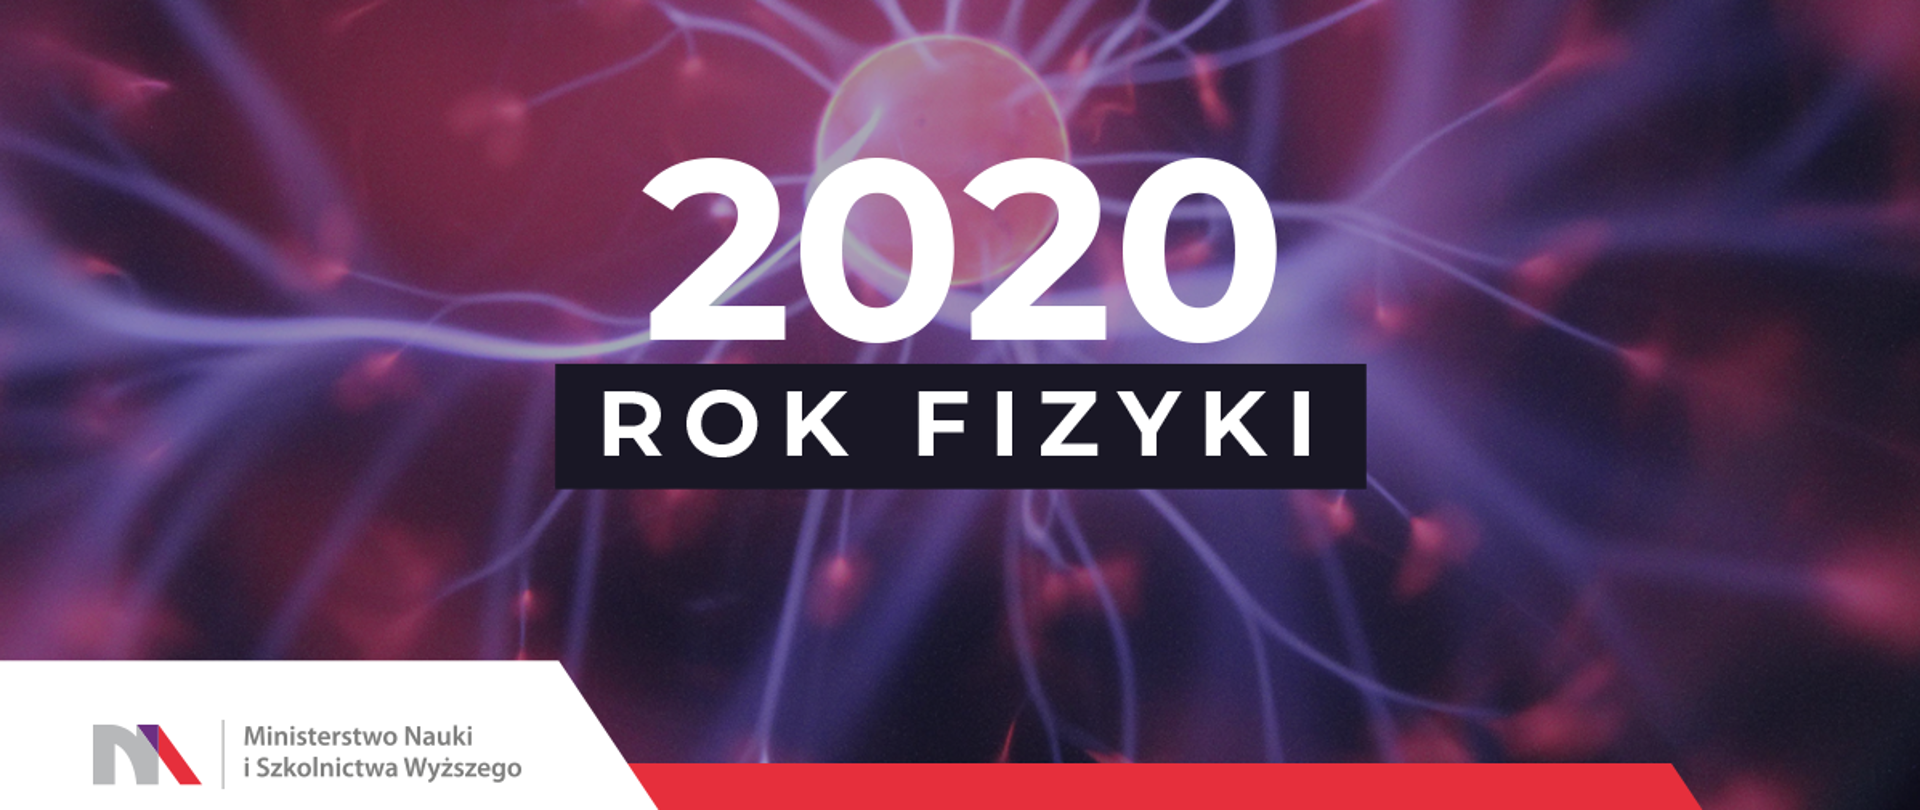 Grafika z napisem "2020 rok fizyki".